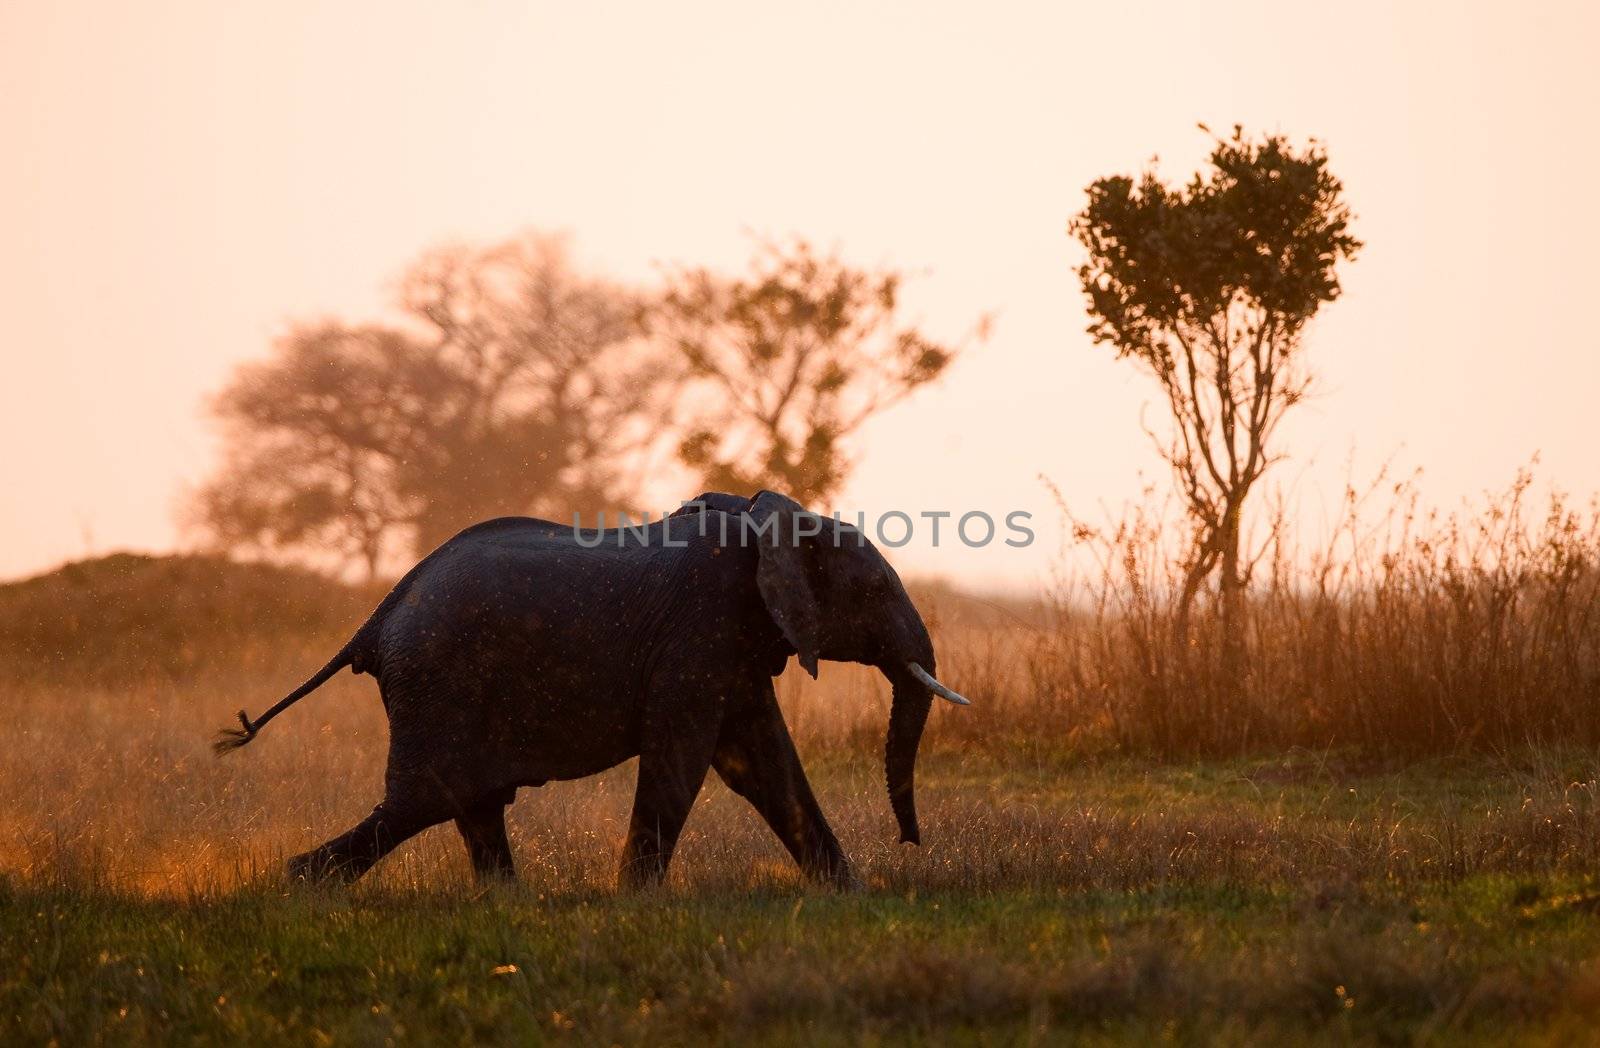 Running on a sunset. An elephant running in beams of the sunset sun. Savanna. The coming sun.